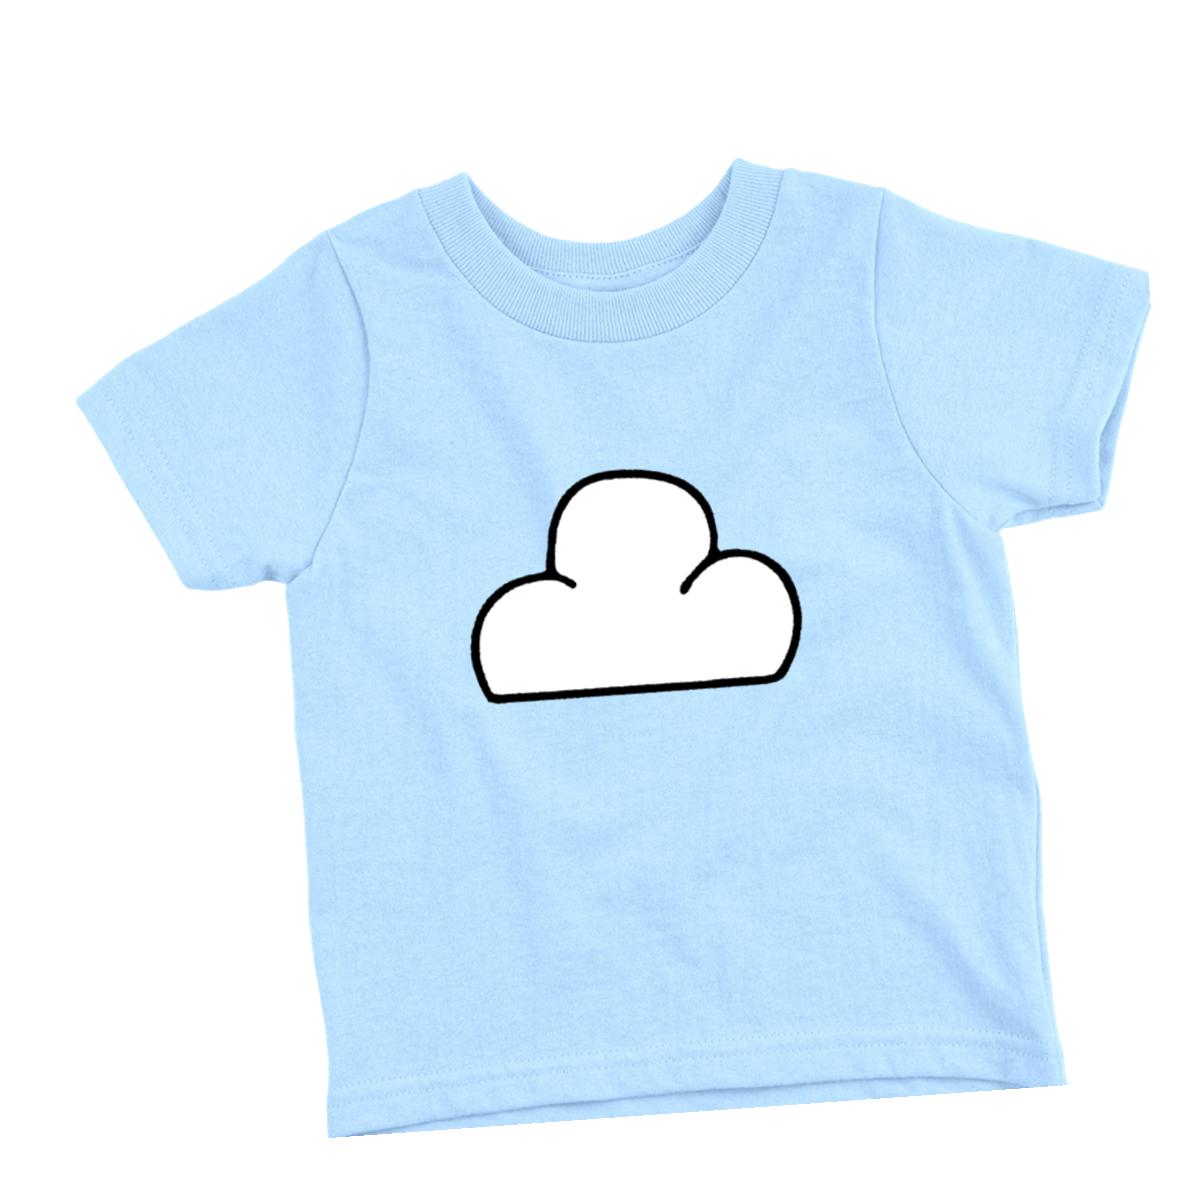 Cloud Infant Tee 18M light-blue